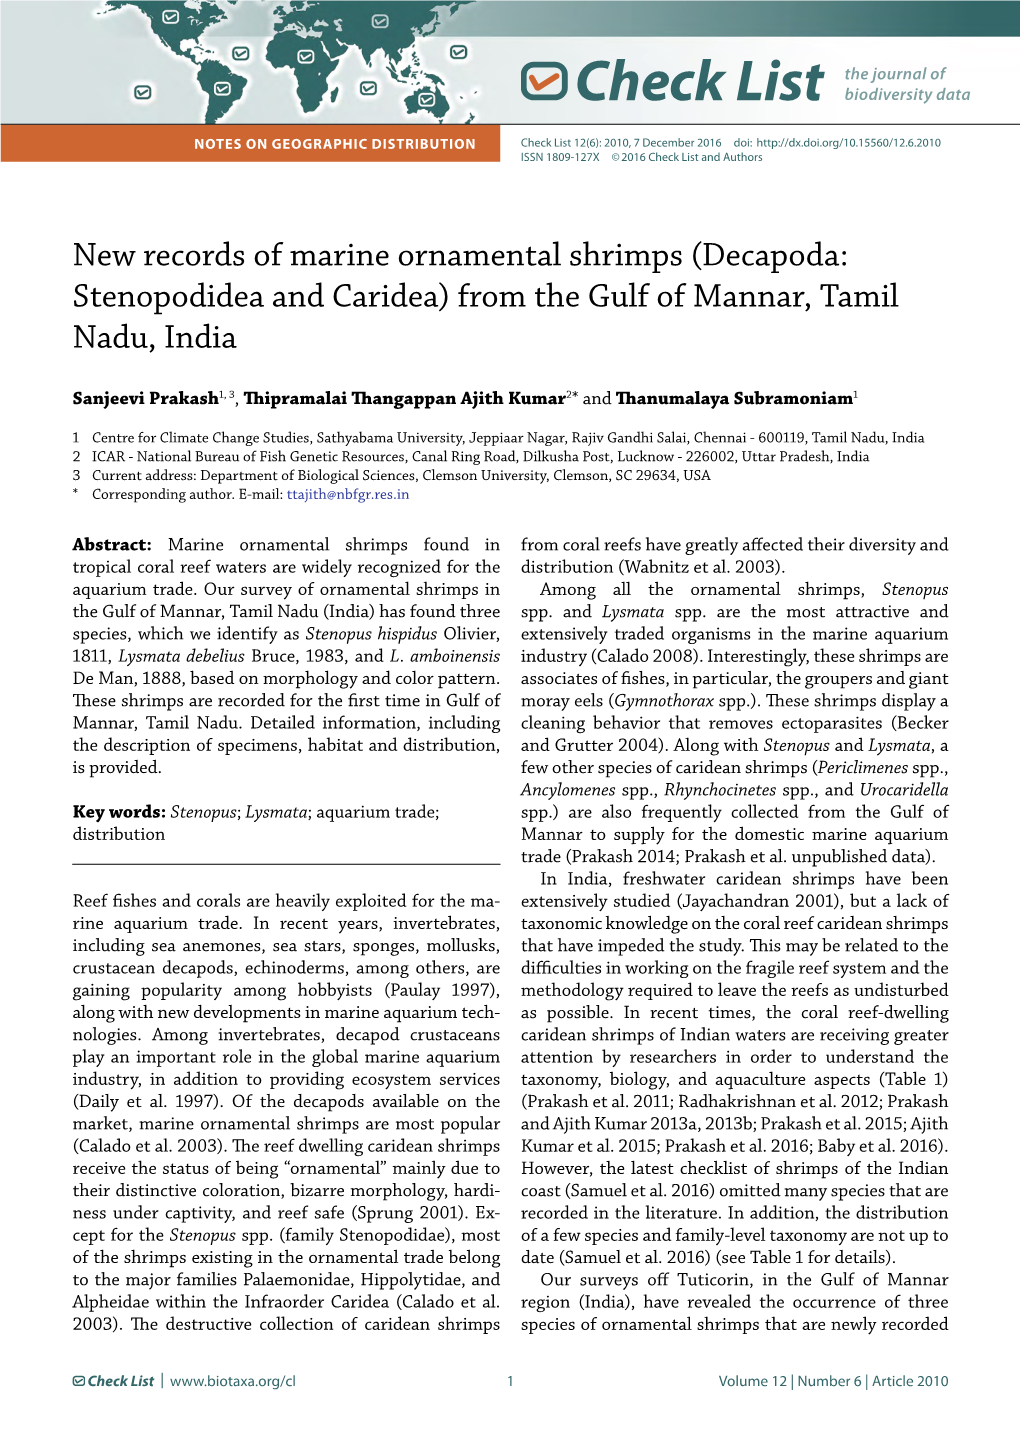 New Records of Marine Ornamental Shrimps (Decapoda: Stenopodidea and Caridea) from the Gulf of Mannar, Tamil Nadu, India